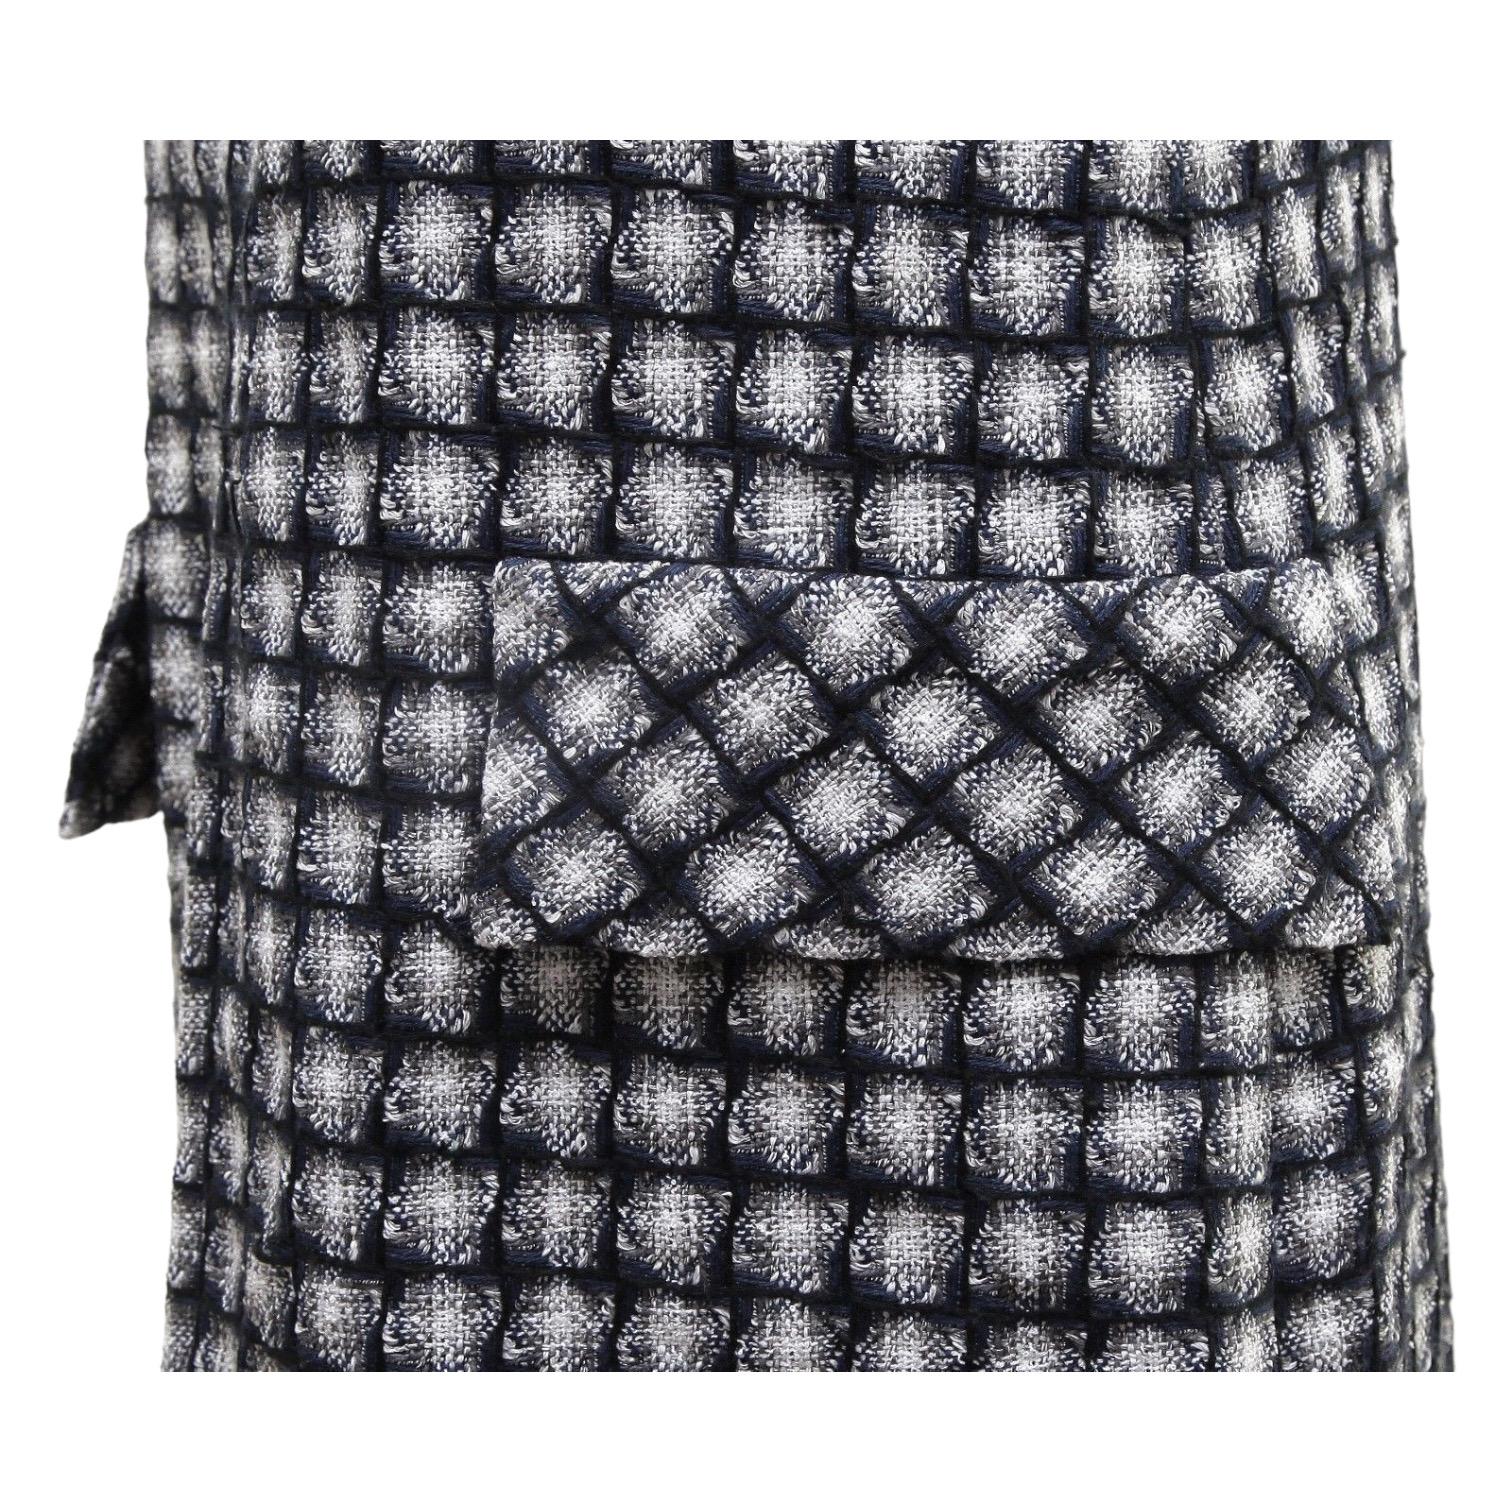 CHANEL Dress Tweed Knit Cap Sleeve Shift Zipper Multi Color Zipper Sz 40 For Sale 4